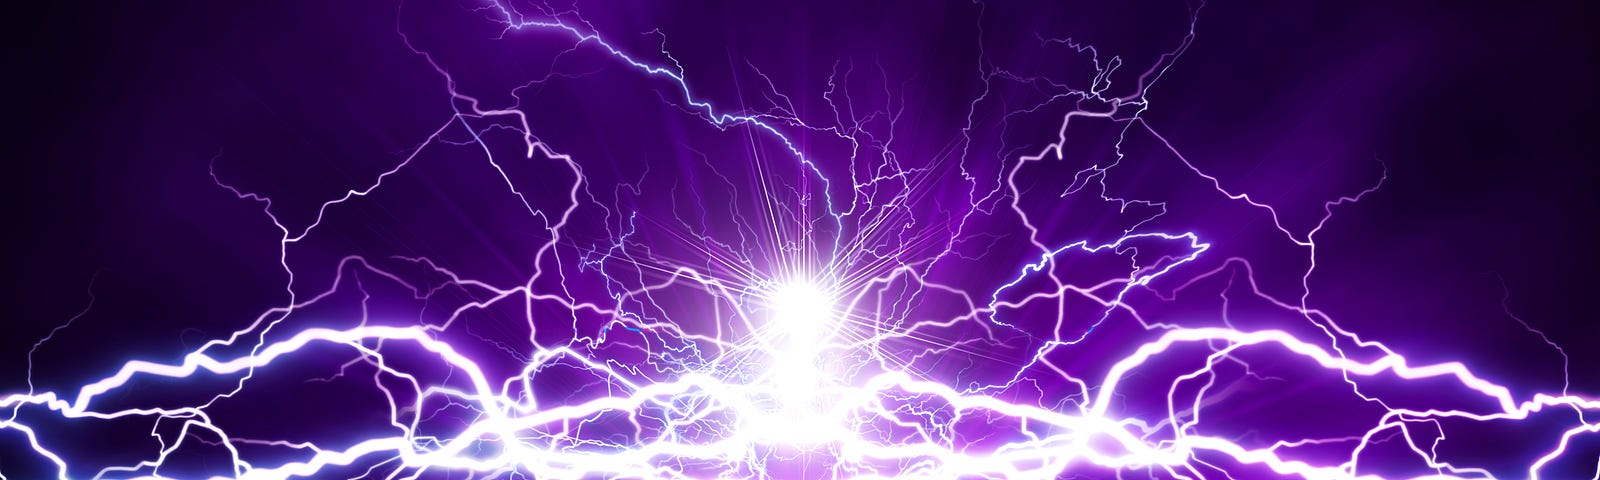 Brilliant purple lightning against a dark purple background. Depositphotos.